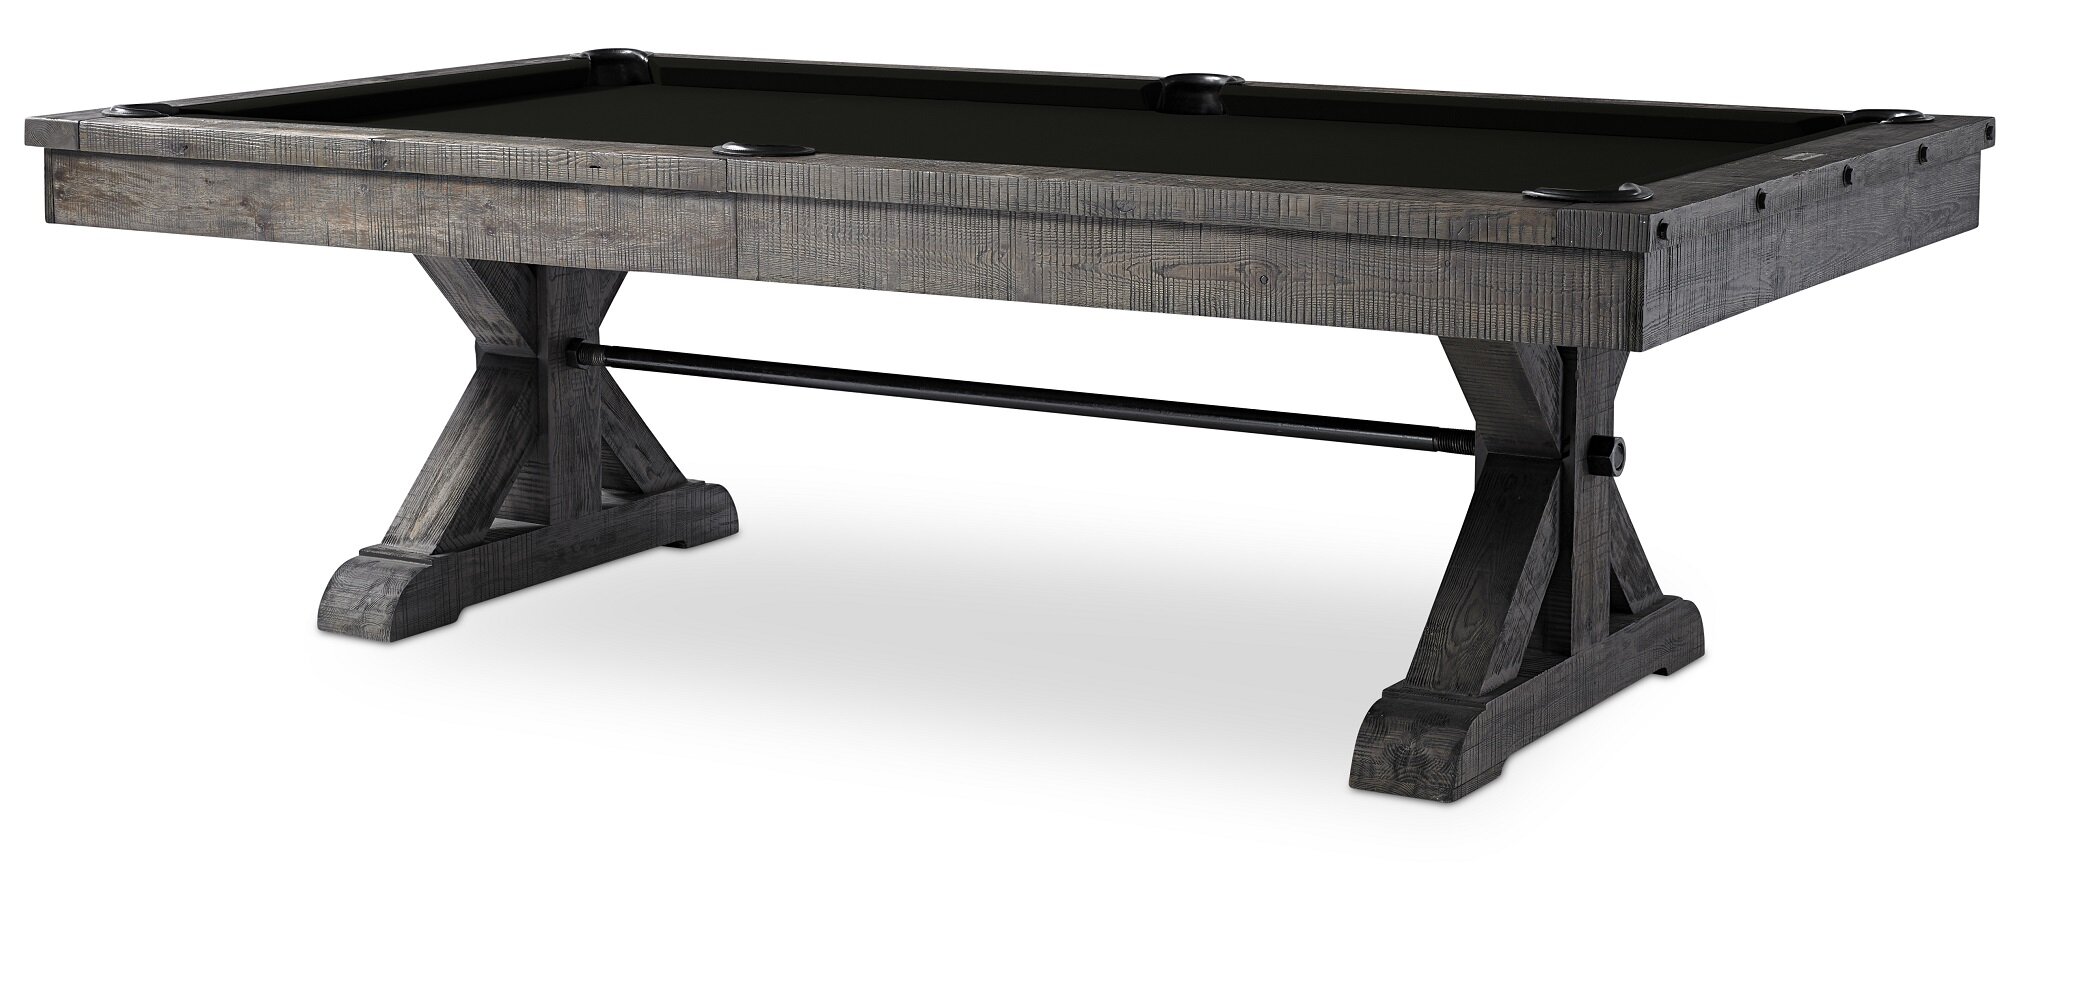 Plank Hide Otis Slate Pool Table With Professional Installation